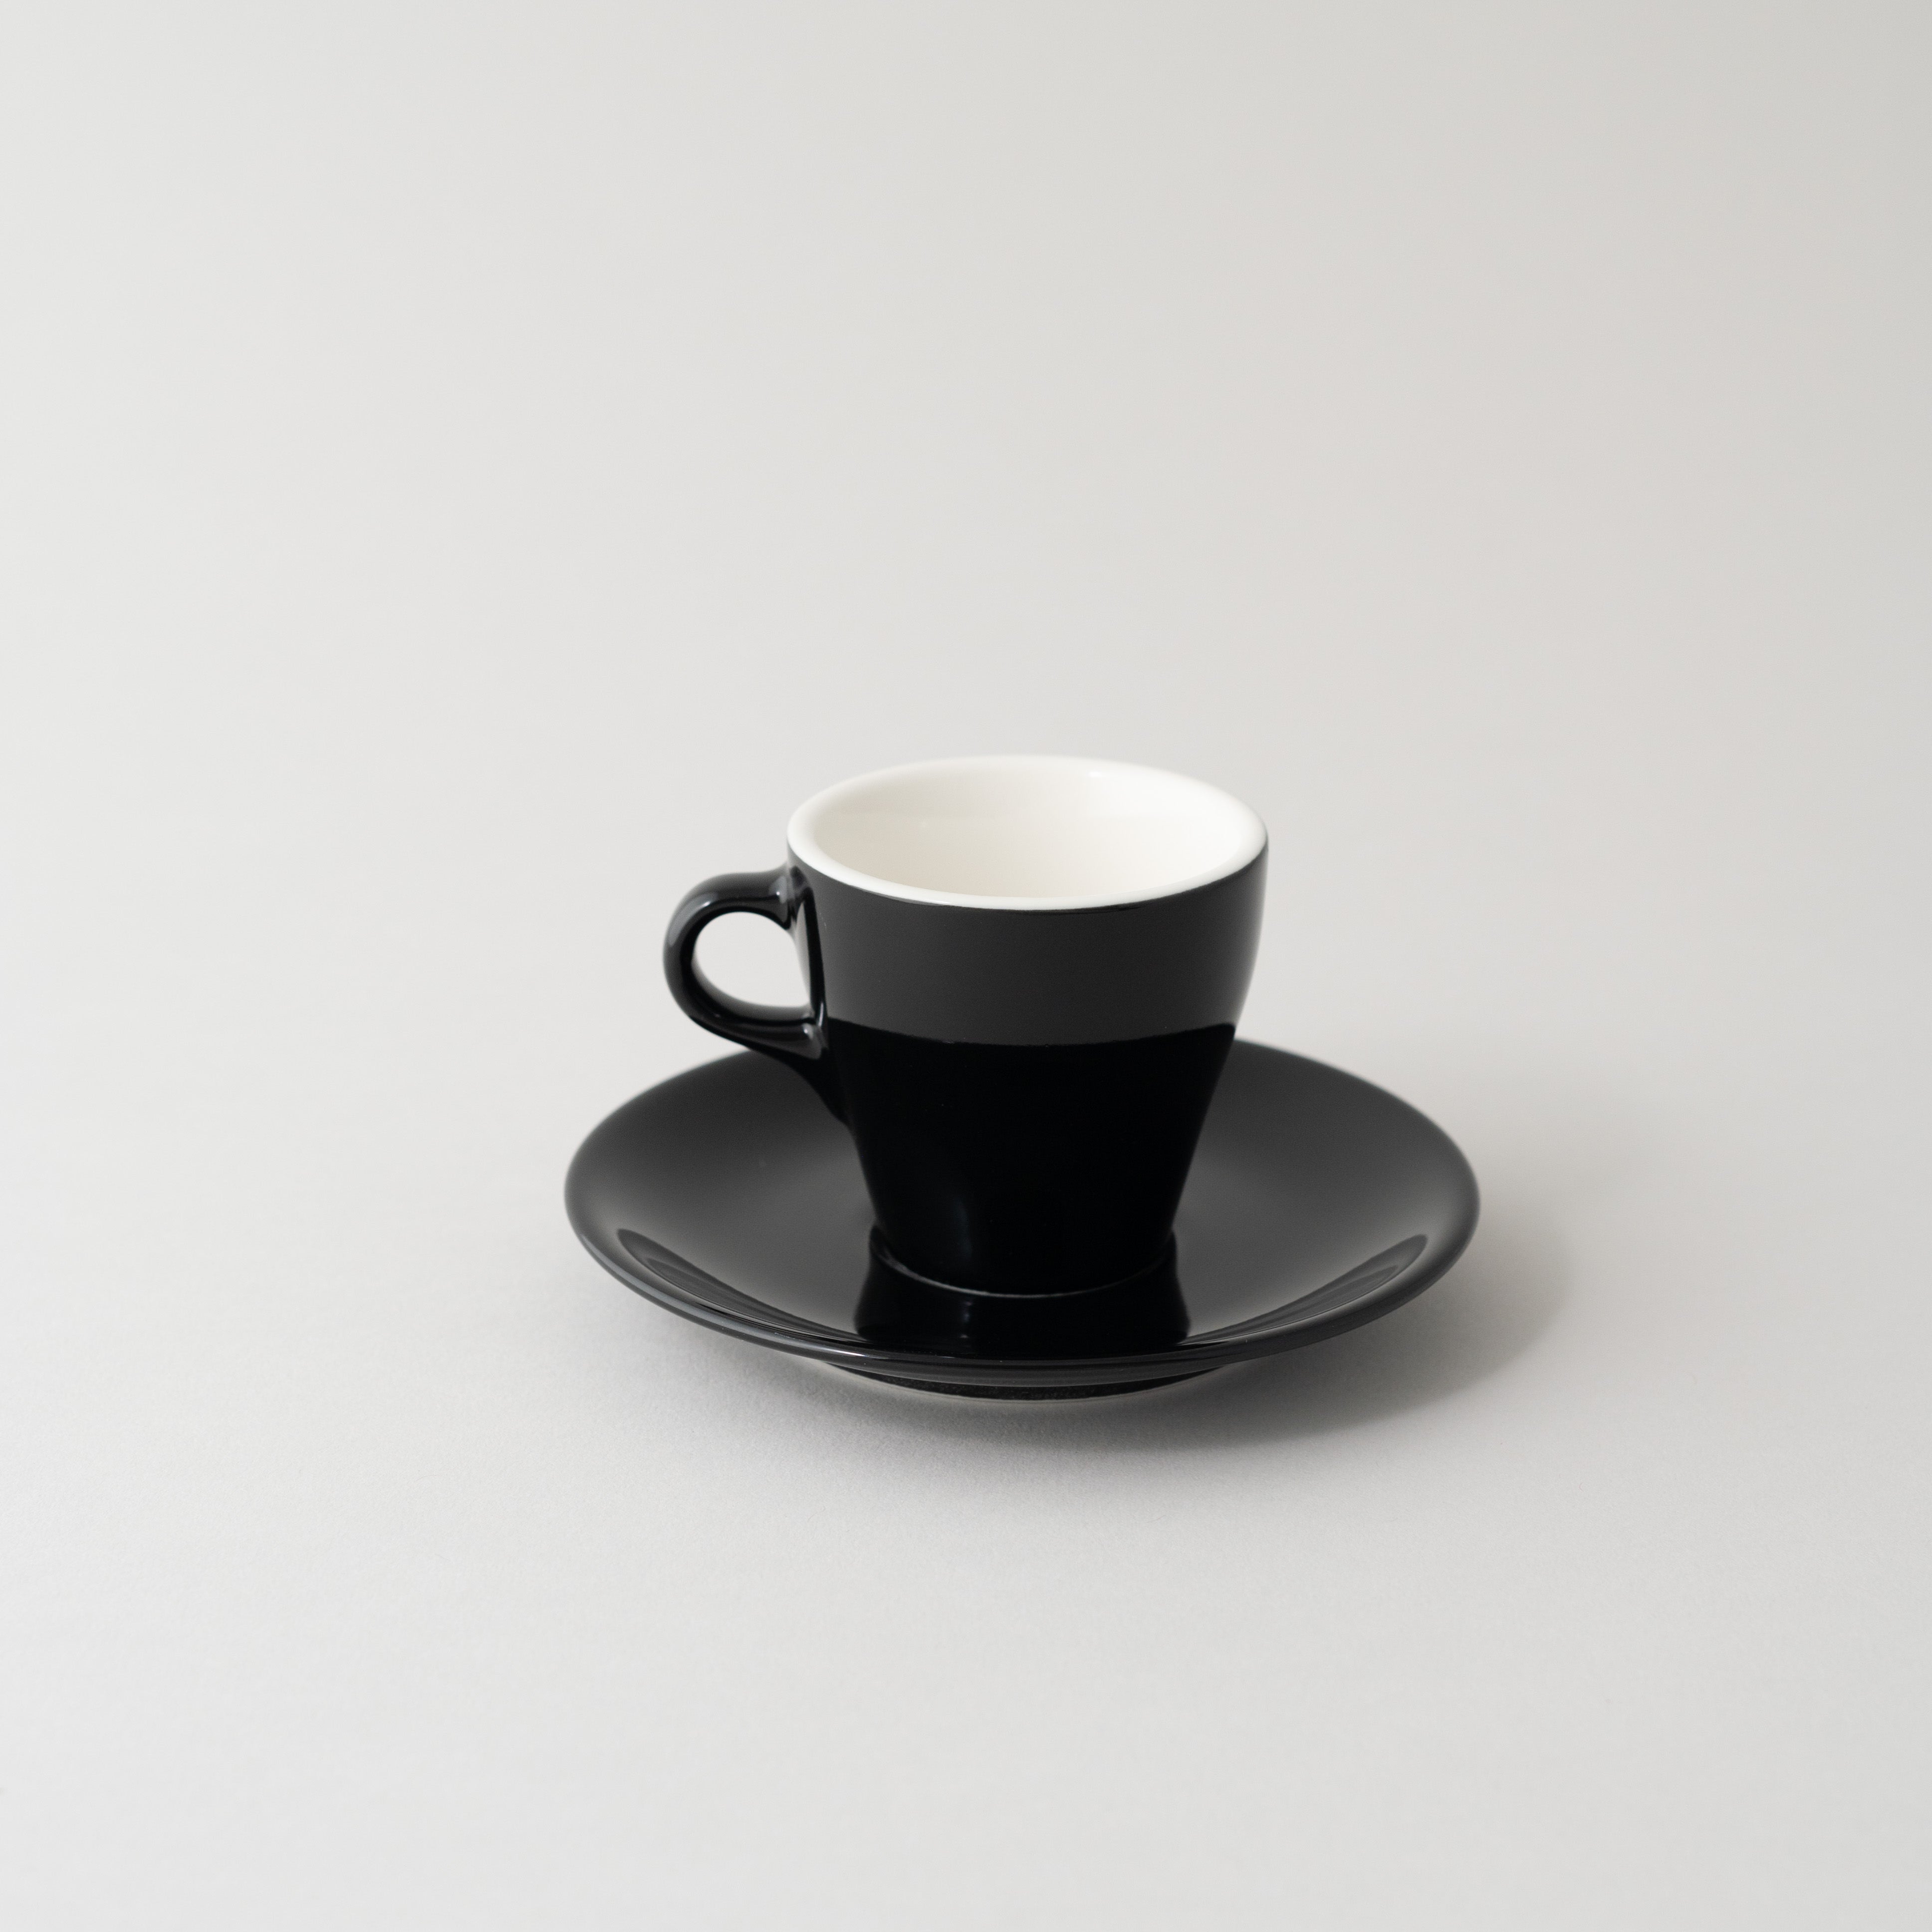 Origami 3 oz Espresso Cup with Saucer Black